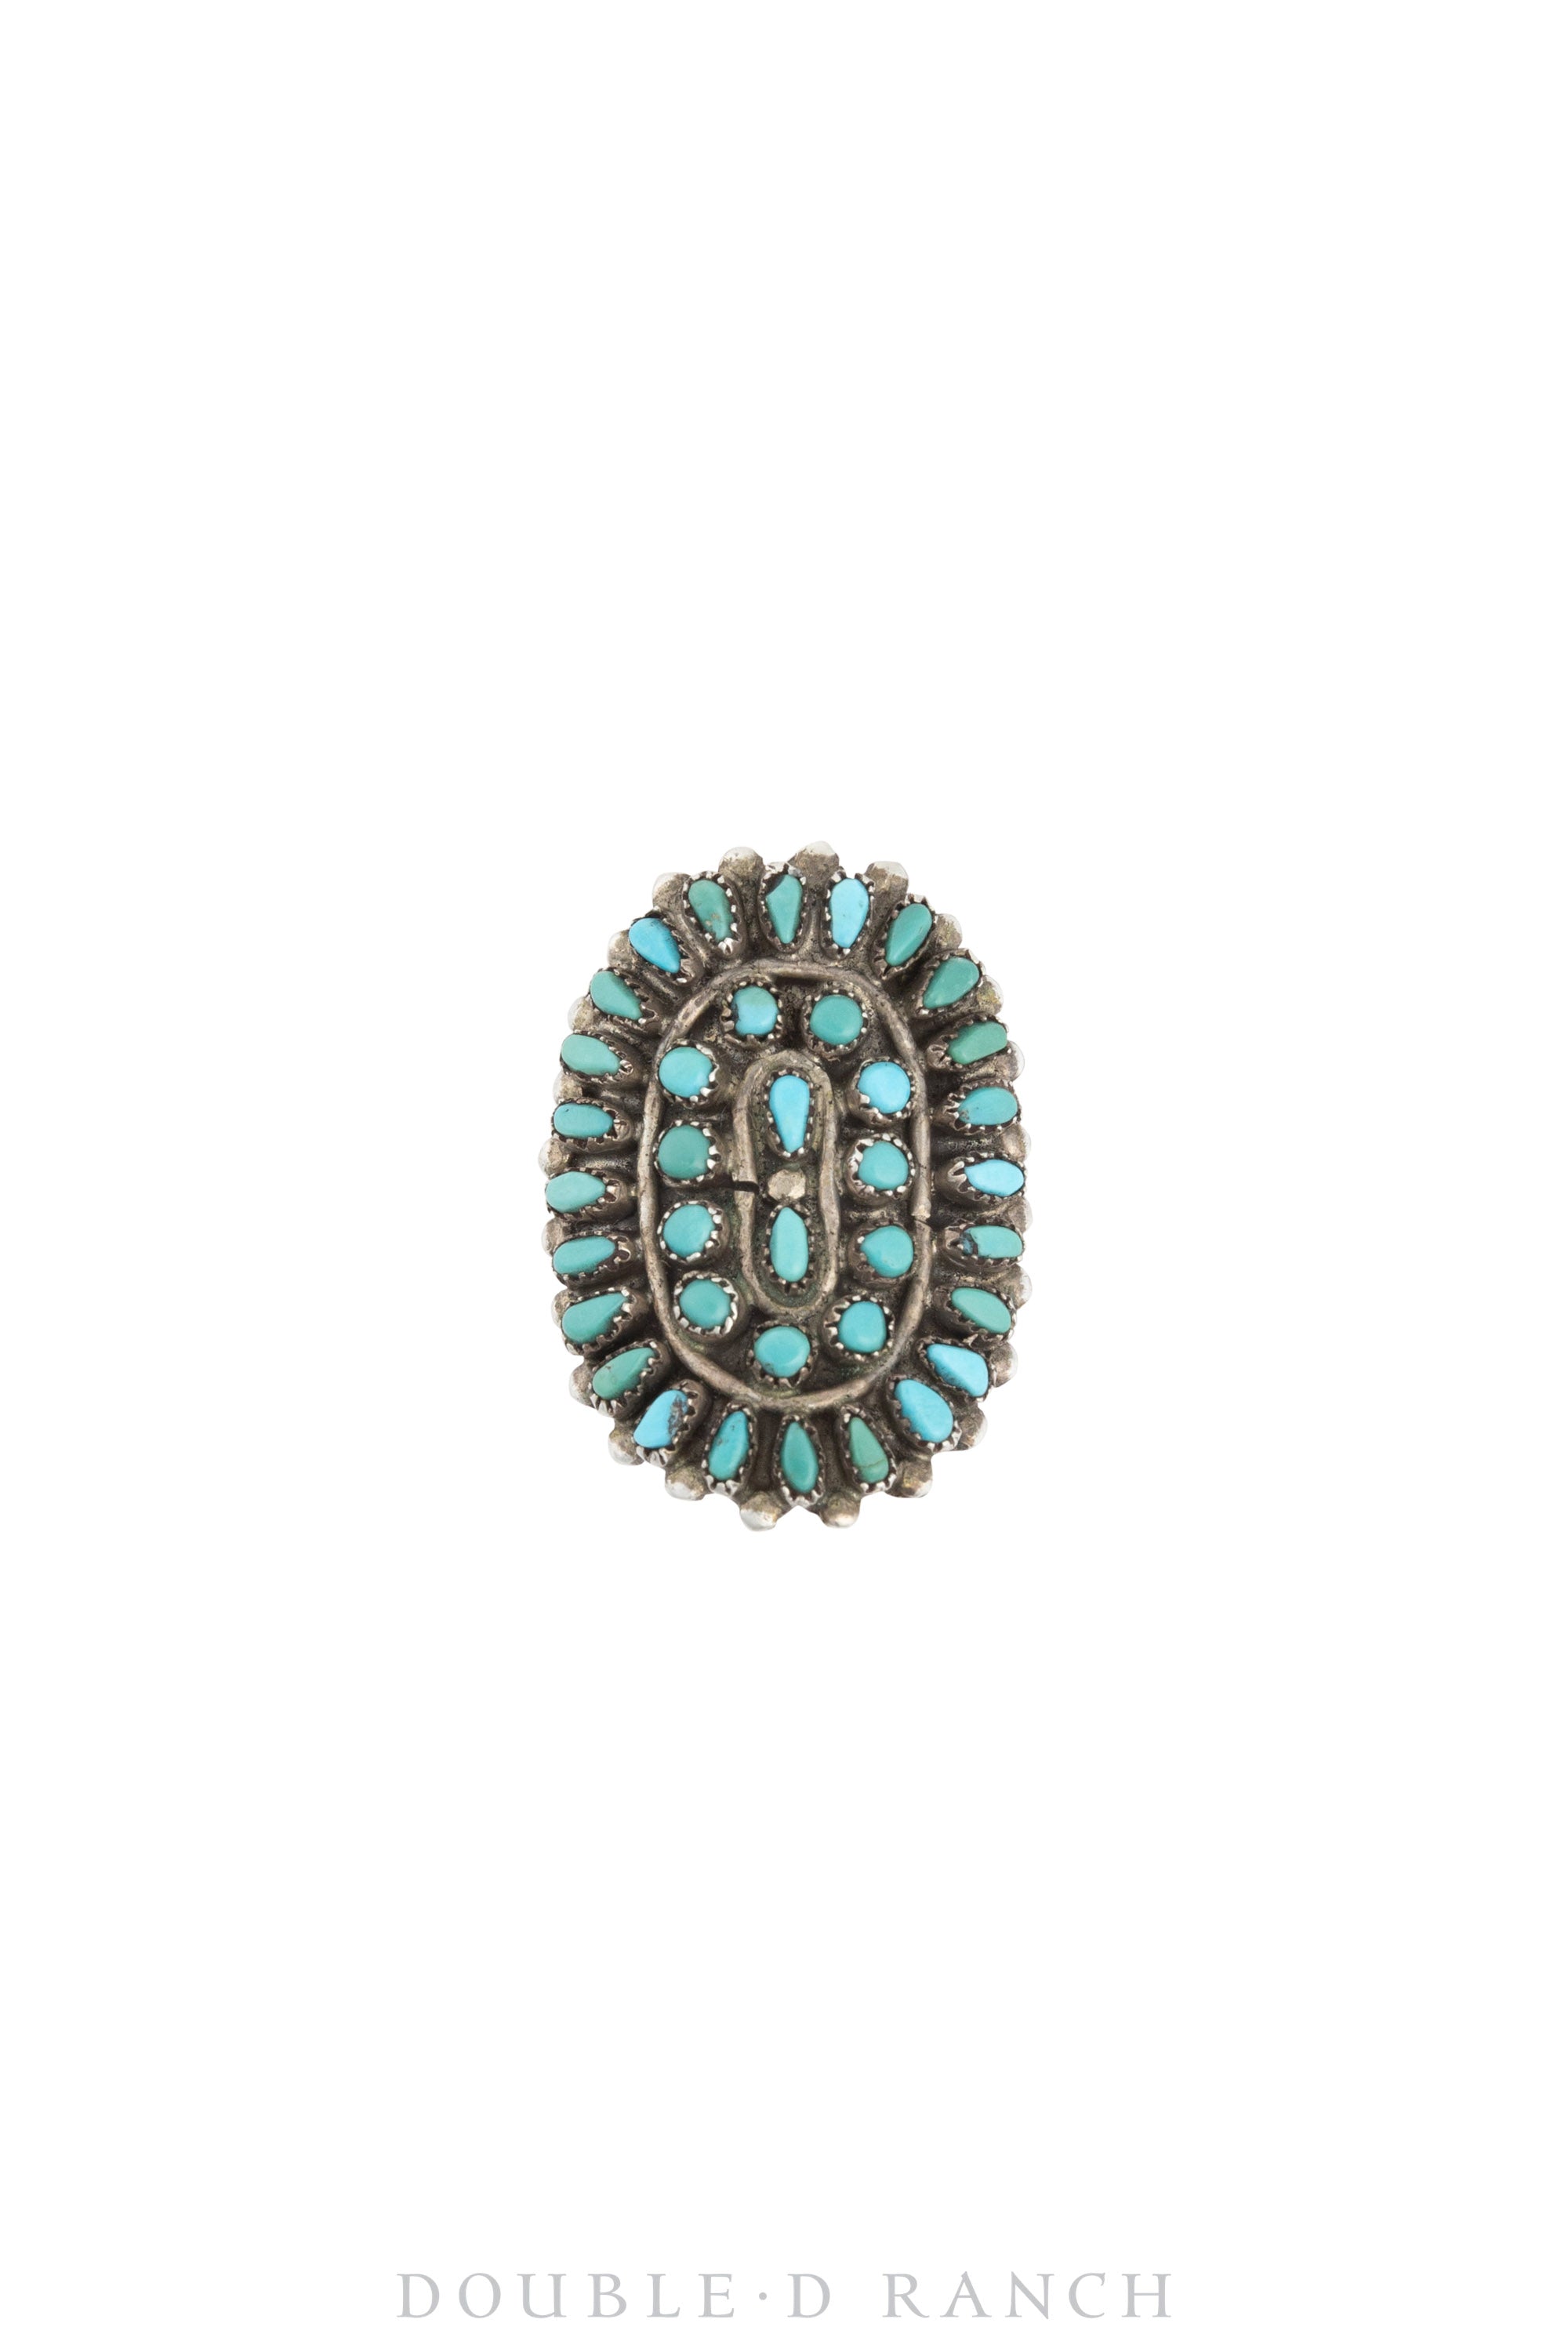 Ring, Cluster, Turquoise, Snake Eye, Vintage ‘40s, 1438